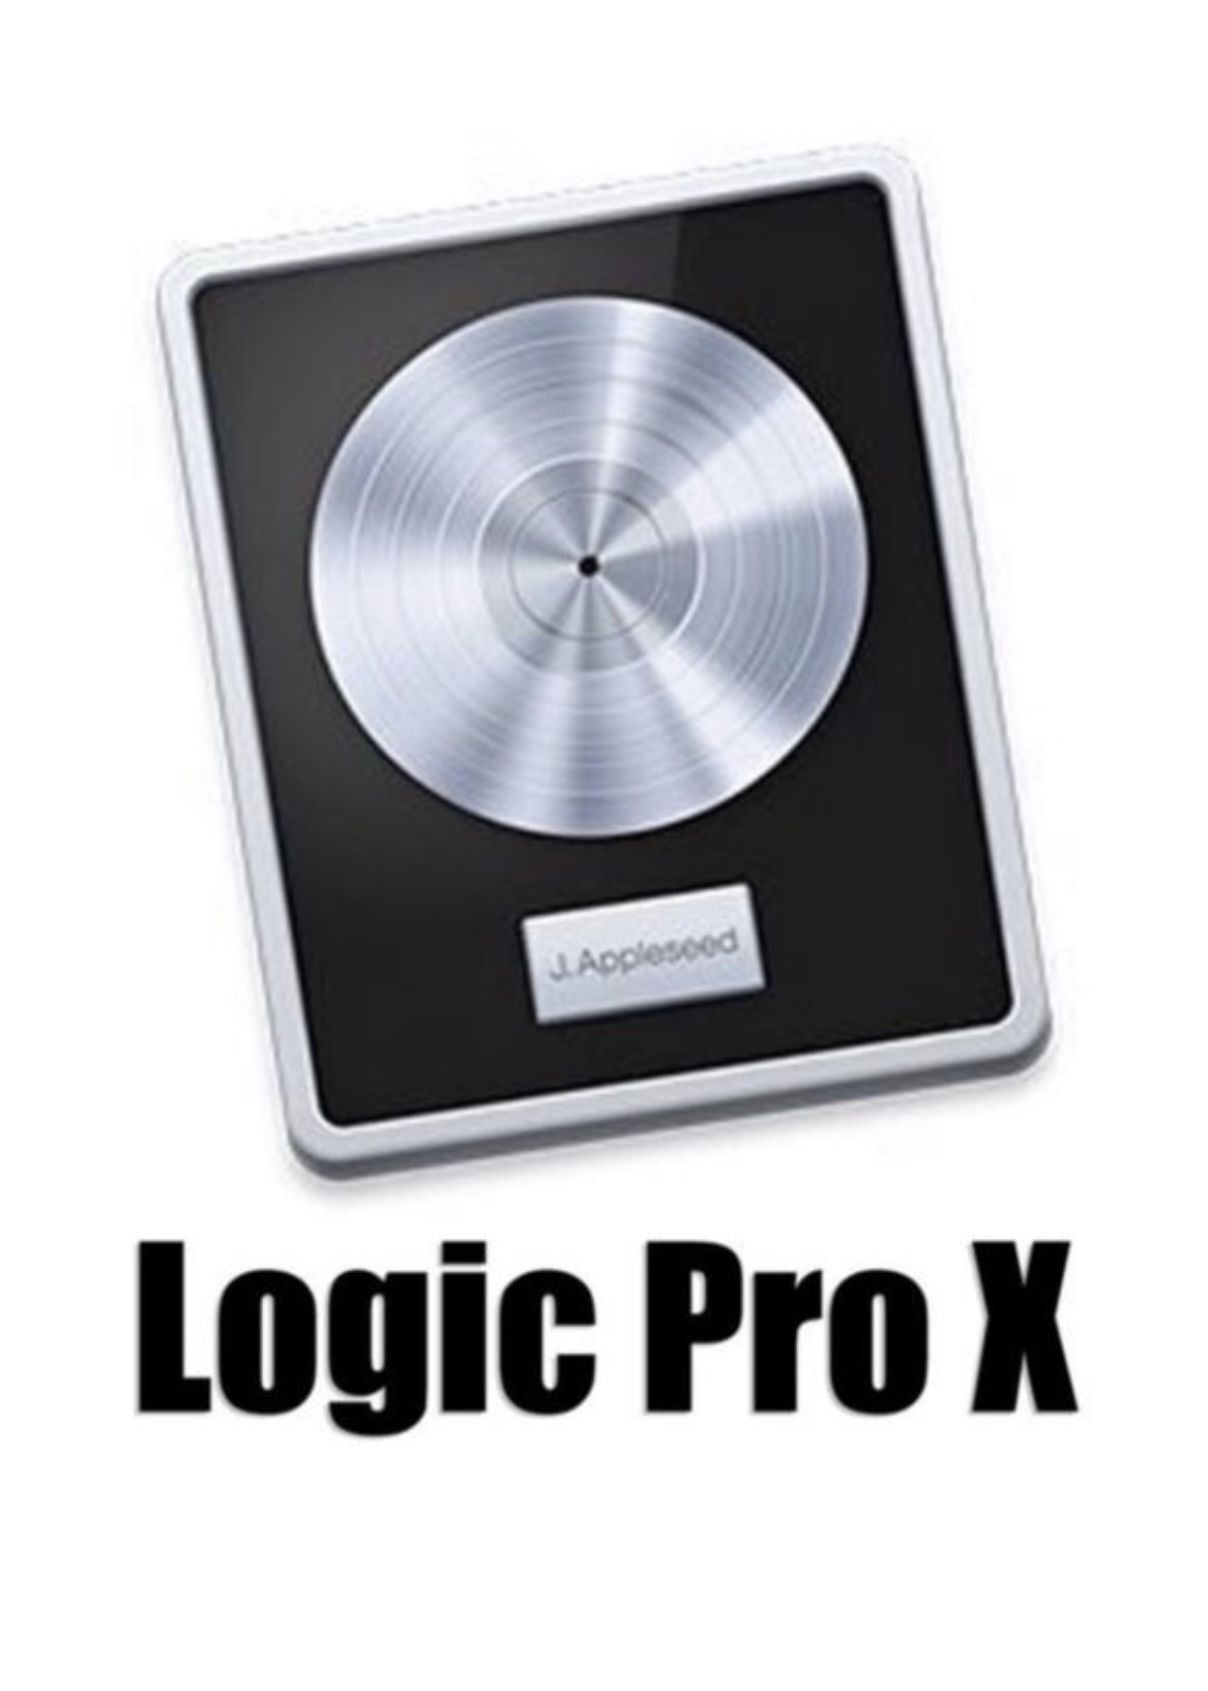 Logic Pro X Studio - Record Produce Edit Mix Master 🎙🎧🎹